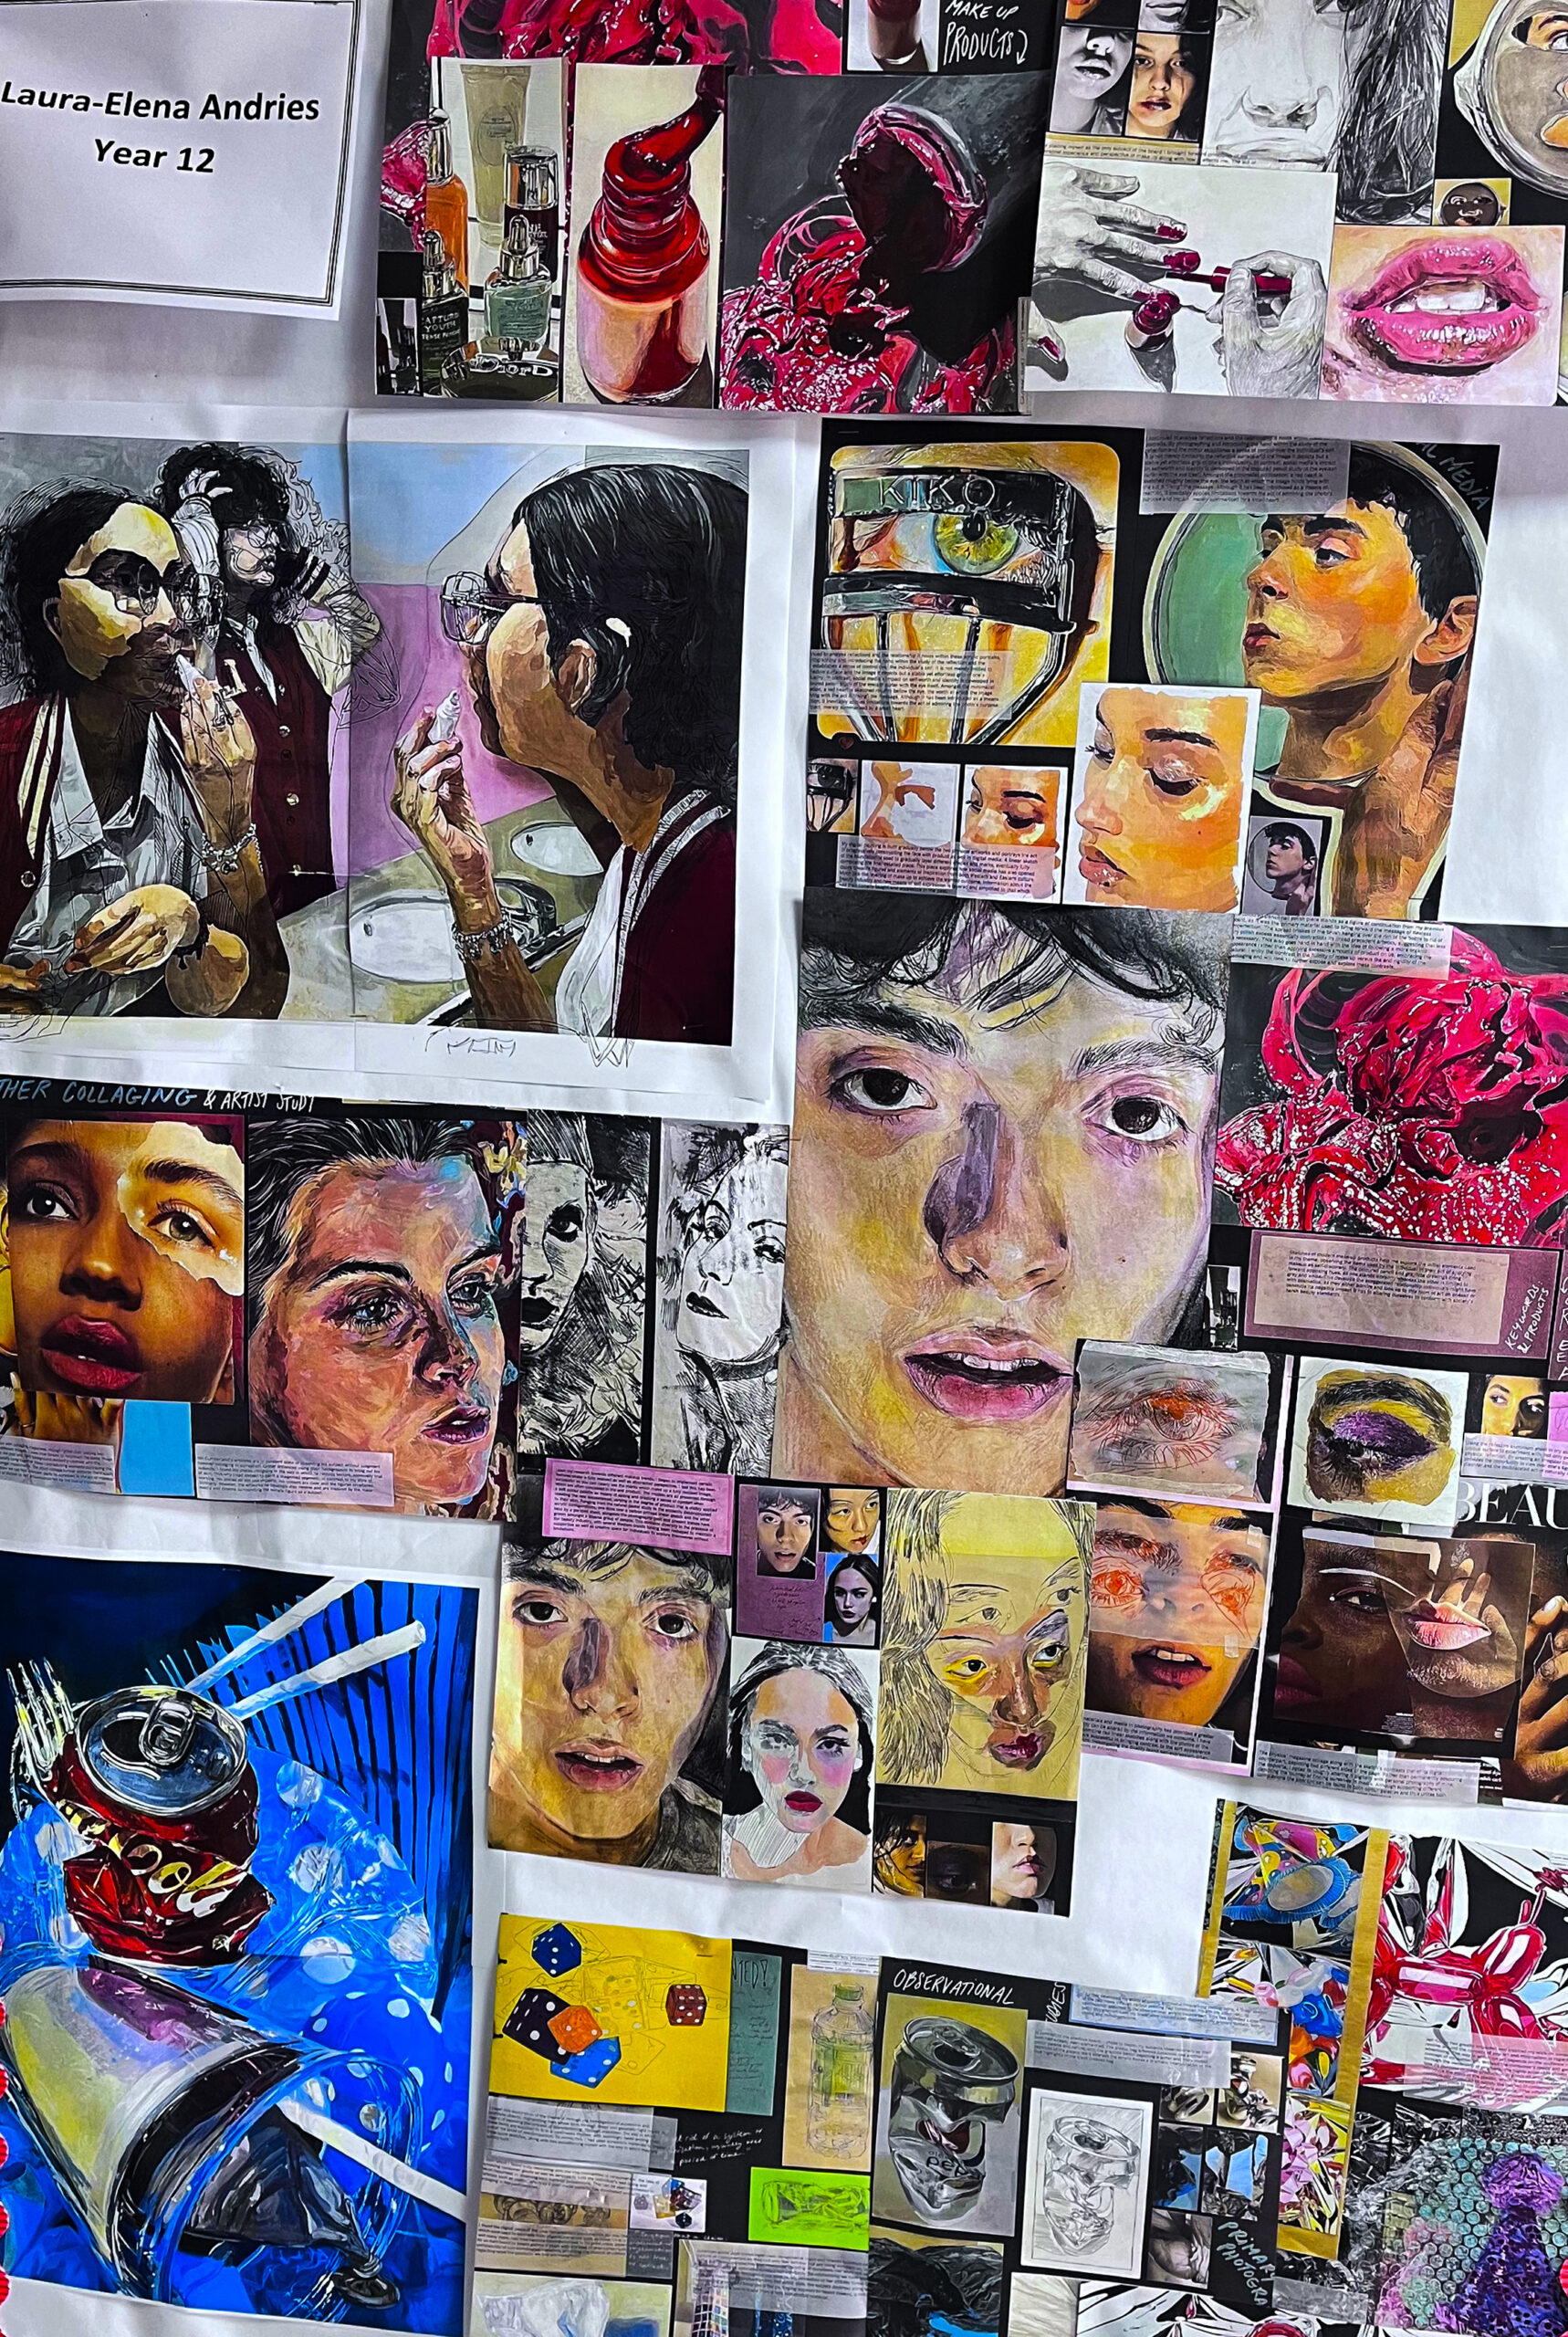 A showcase of A Level Art work by a Sixth Form student at Raffles International School in Dubai